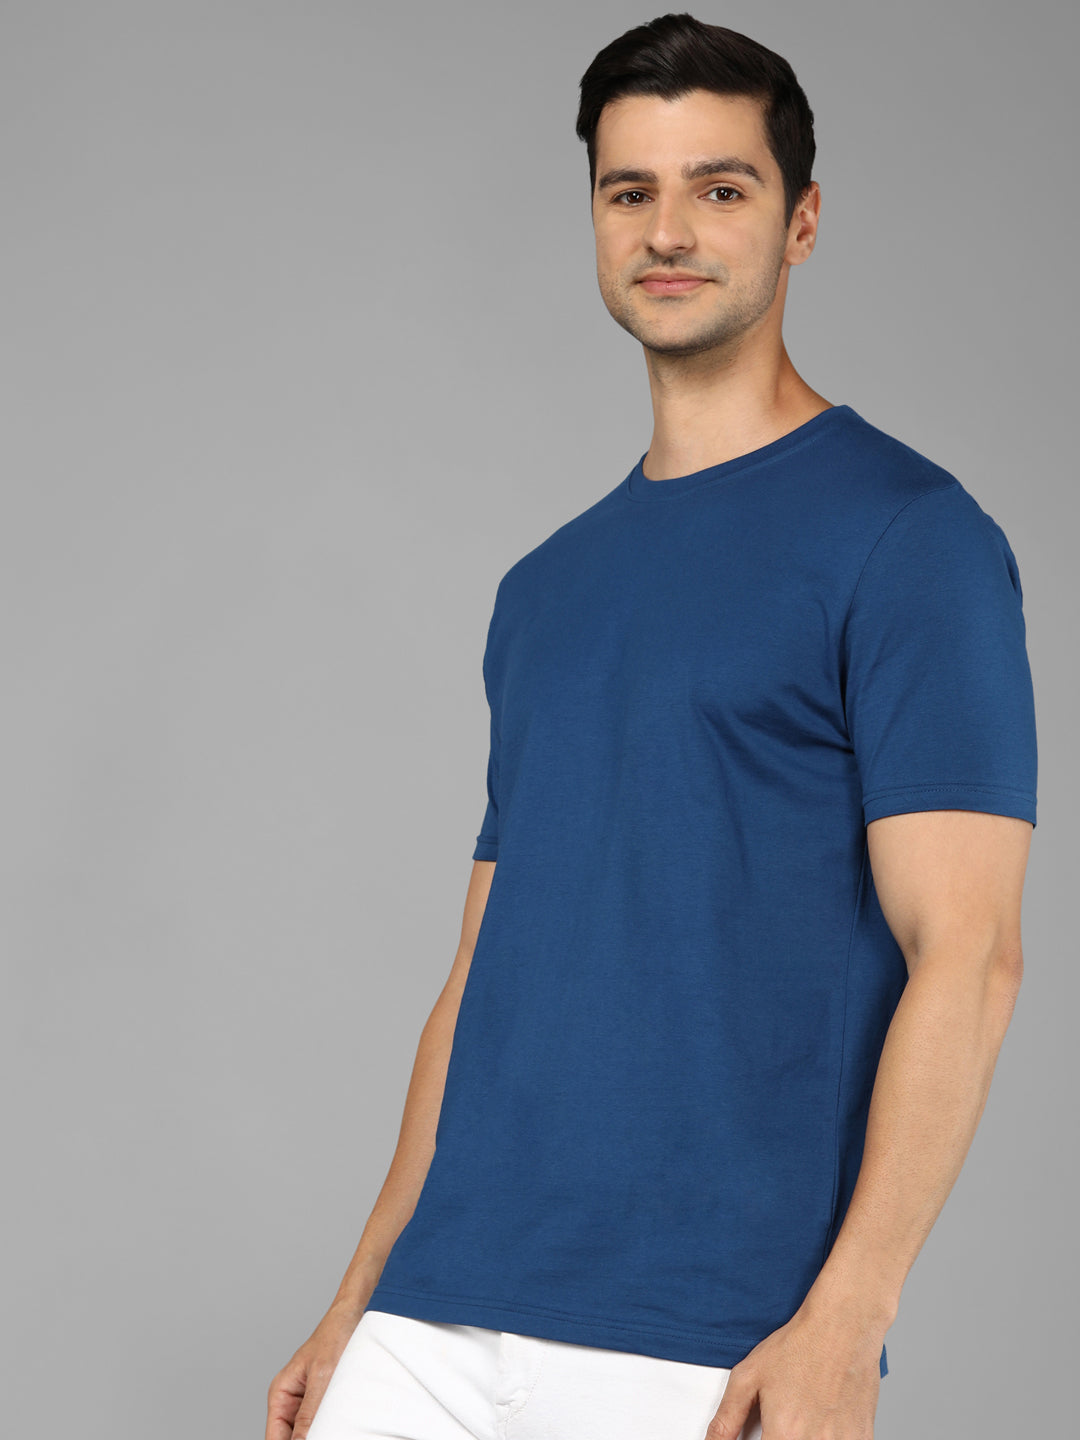 Joe Wick - Solid Men's T-Shirt - Royale Blue